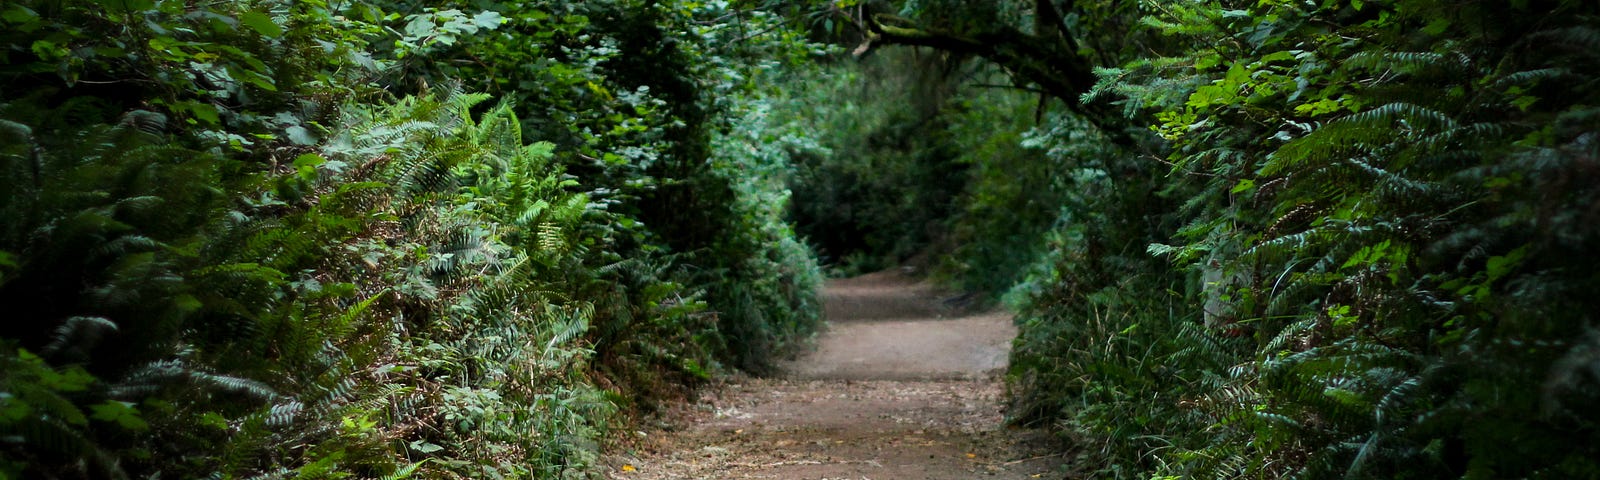 A path winding through woodland